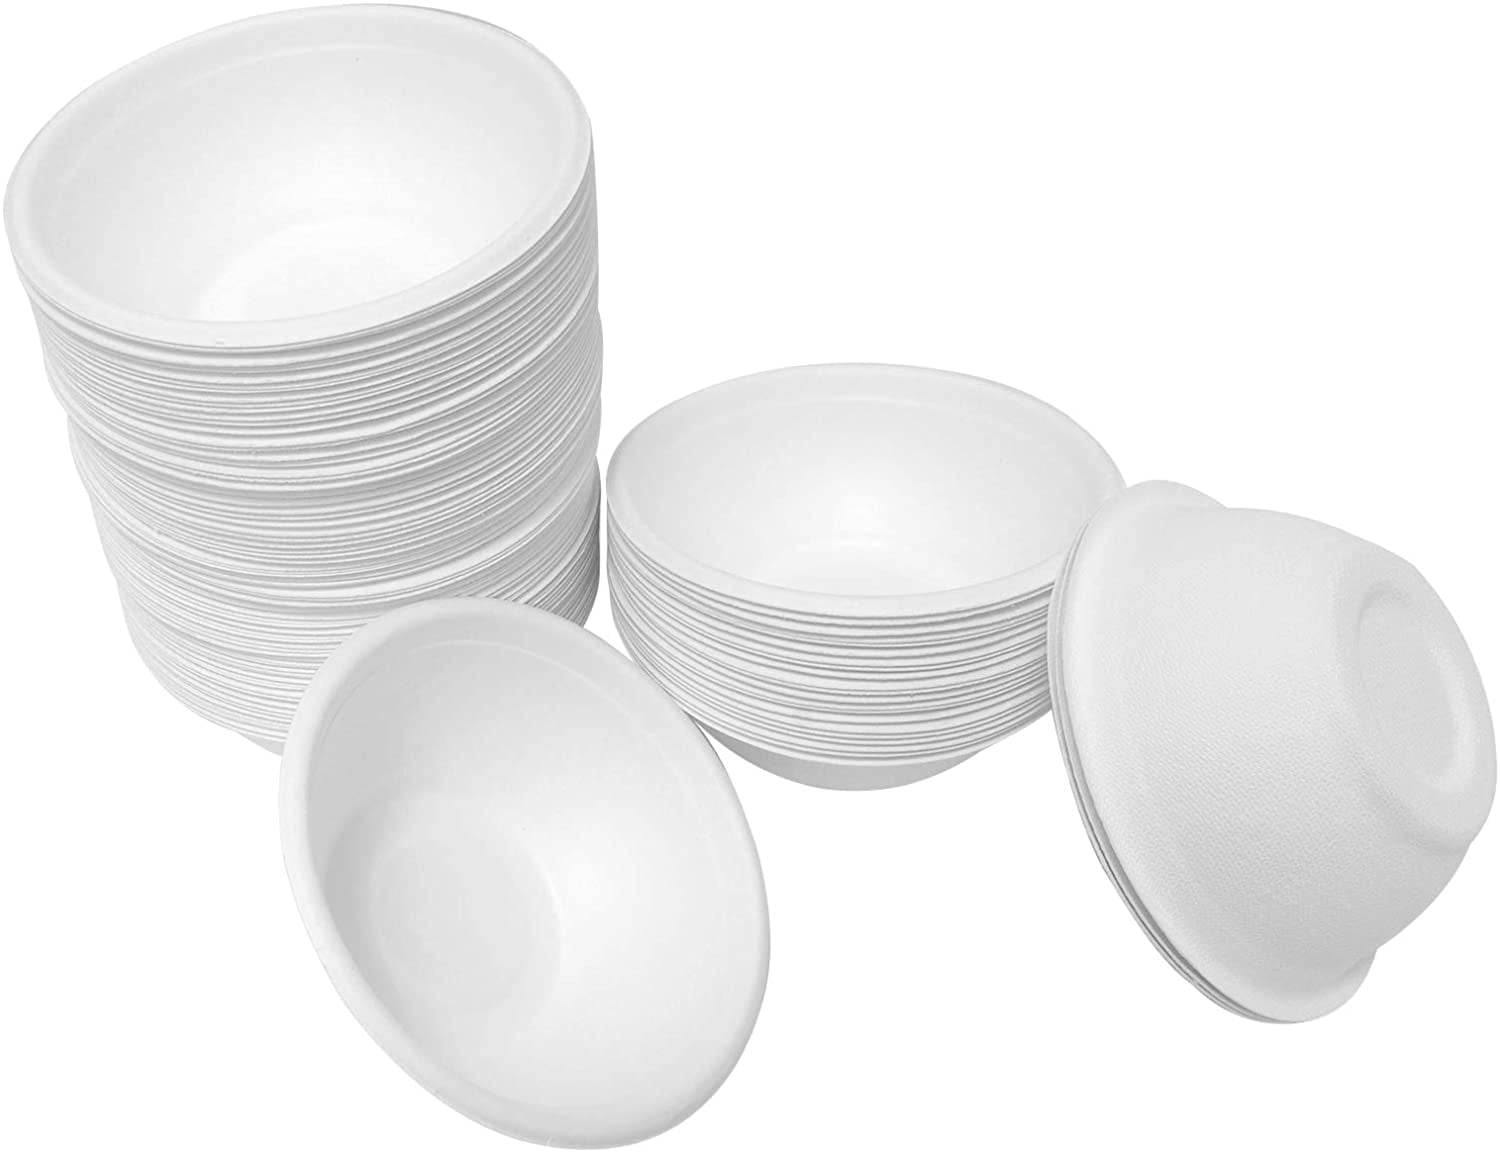 Disposable Paper Soup Bowls With Lids 12 Oz Each Pack Of 100 